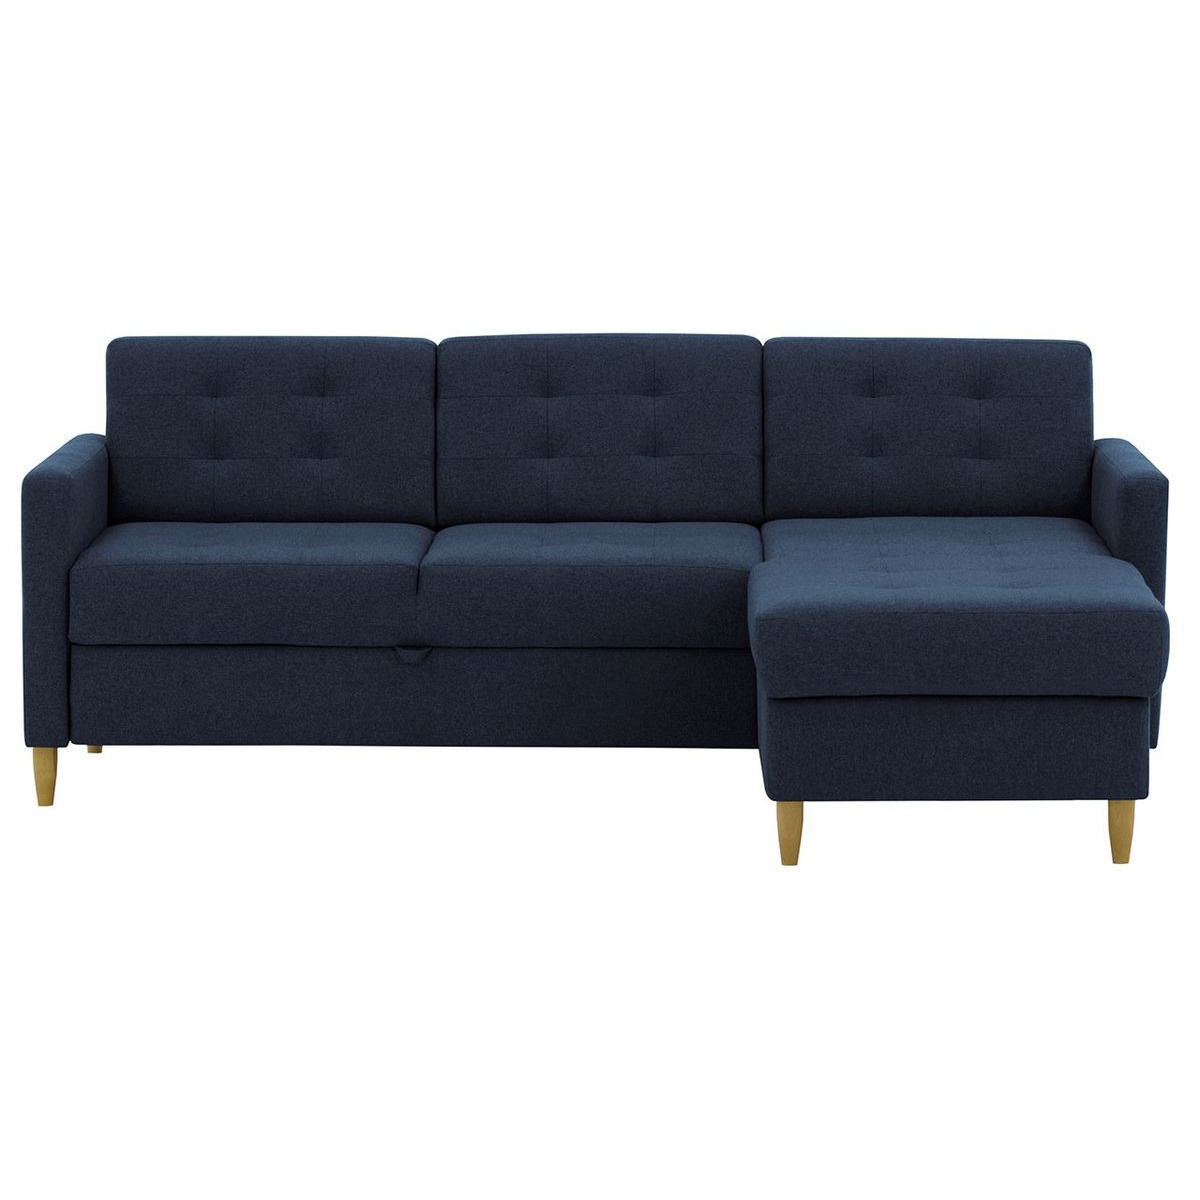 Explorer Corner Sofa Bed With Storage, navy blue - image 1